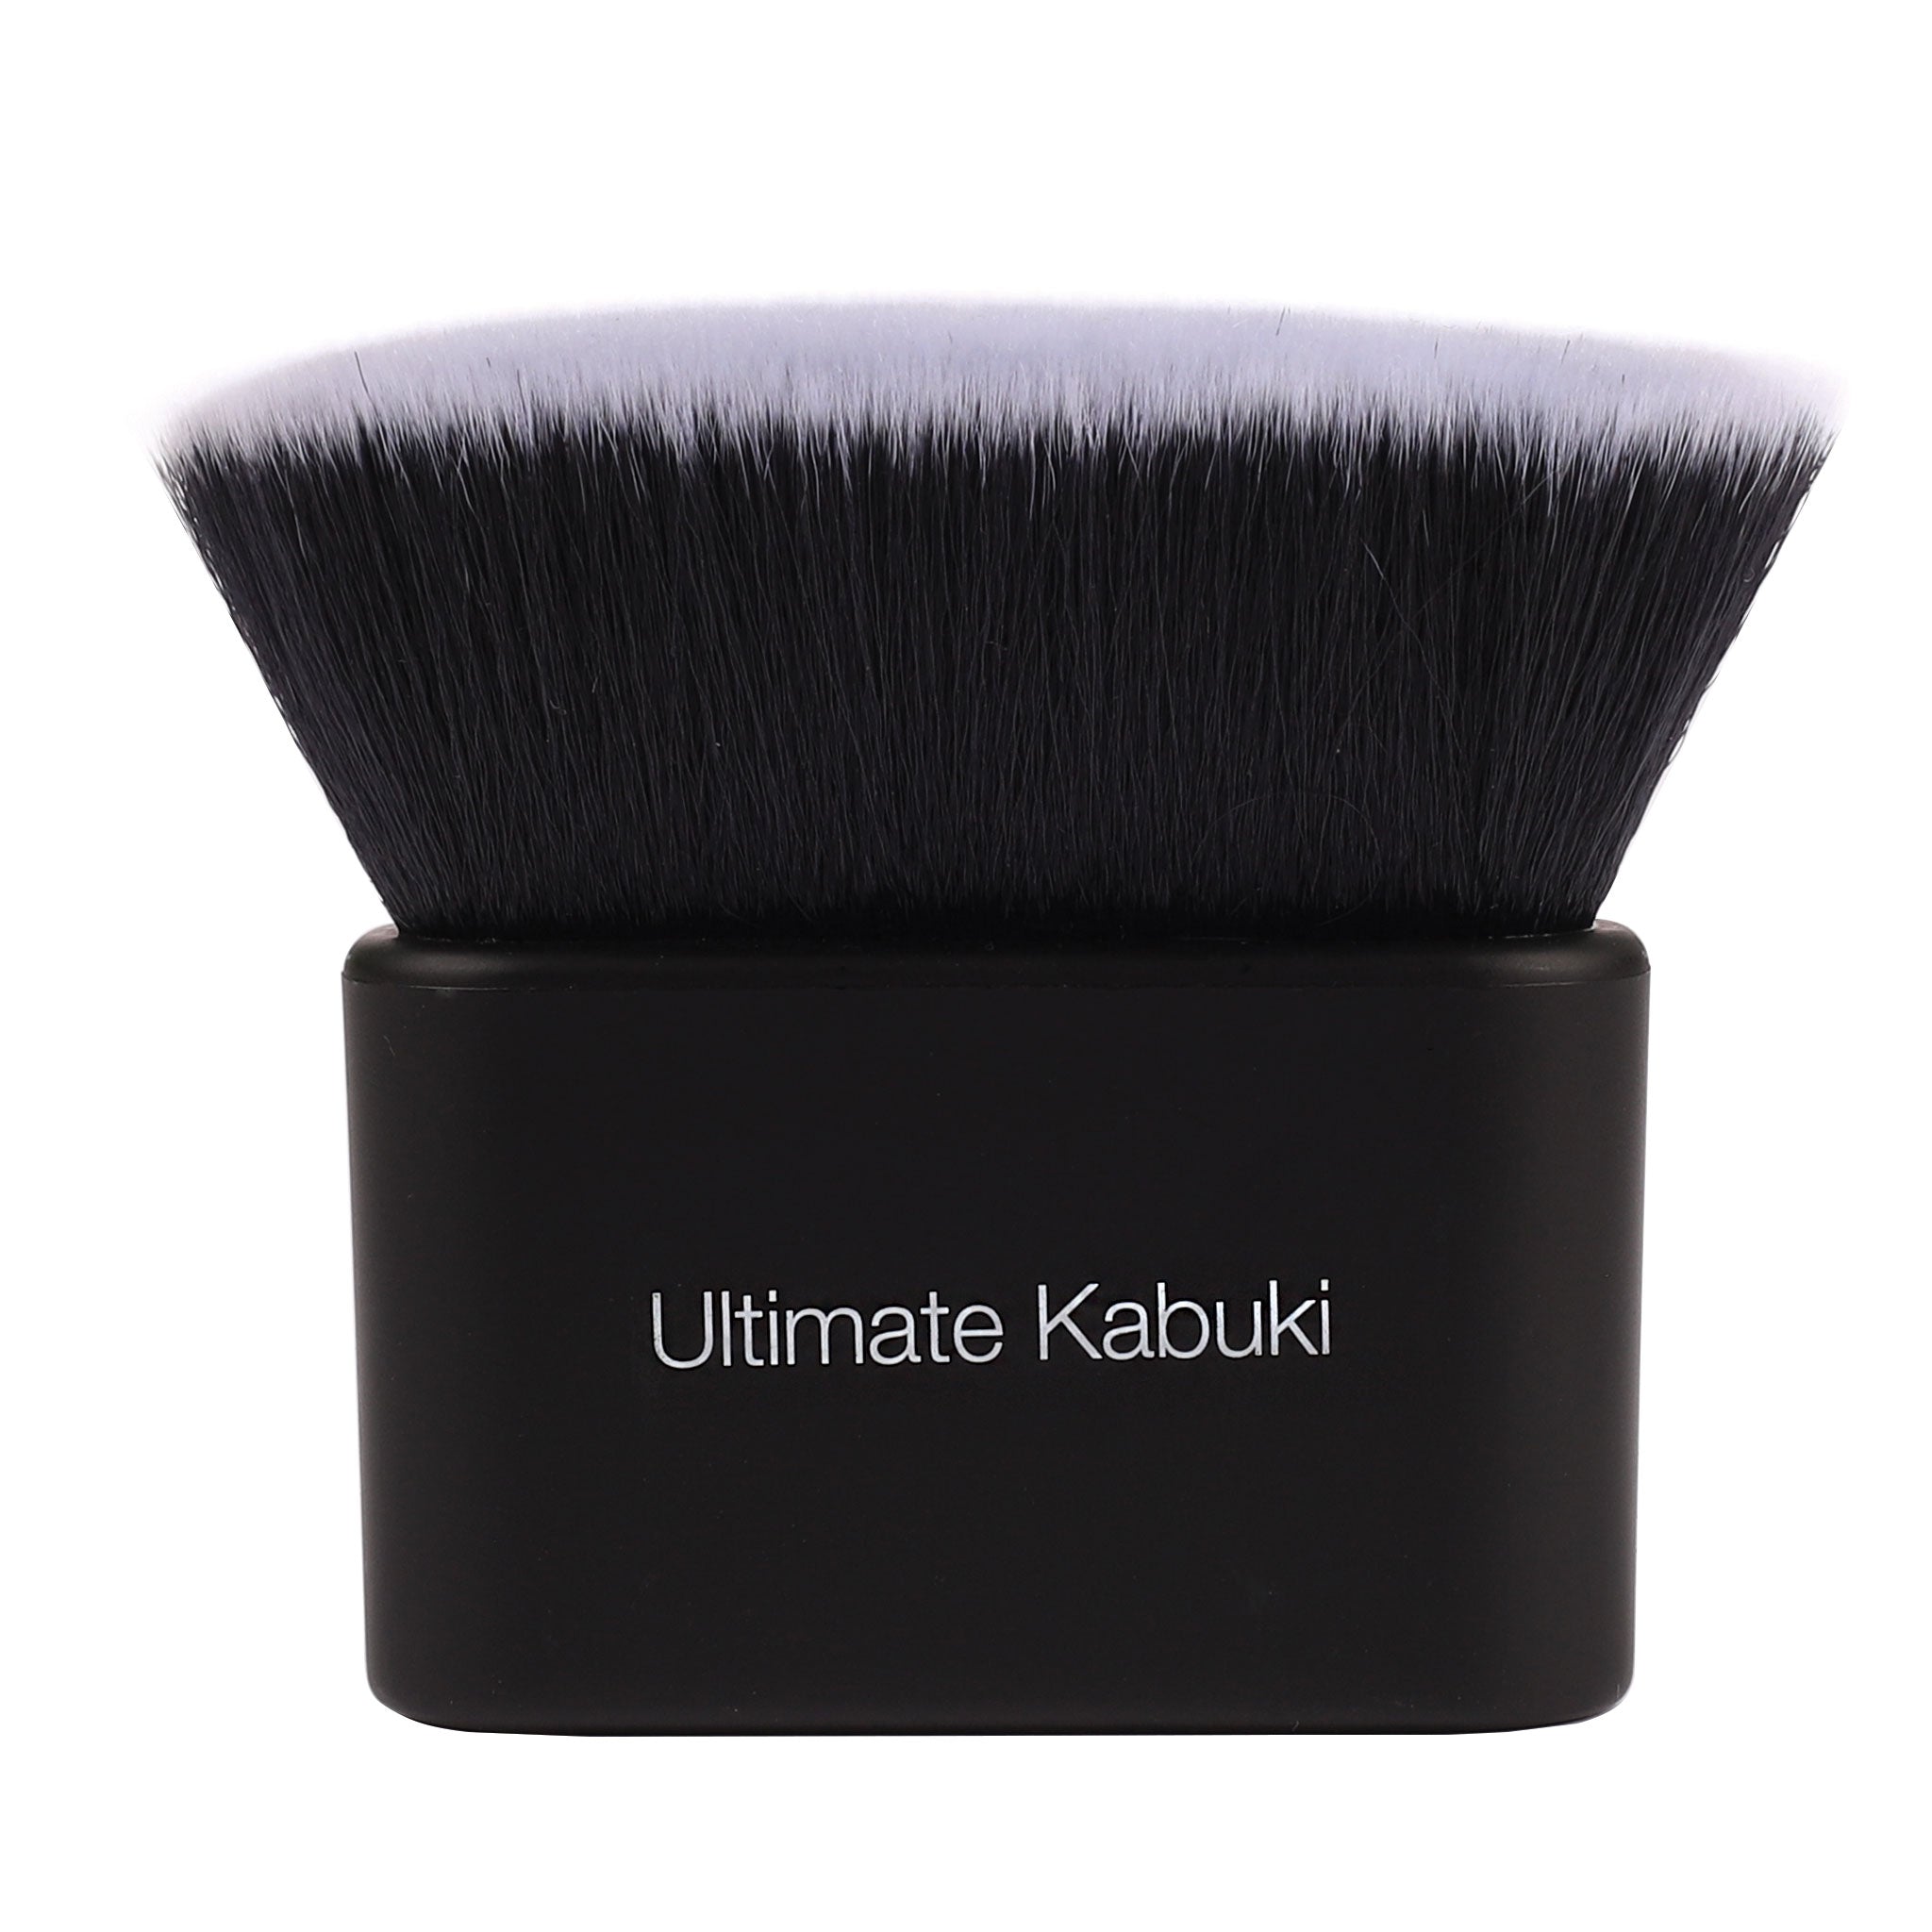 Ultimate Kabuki Brush